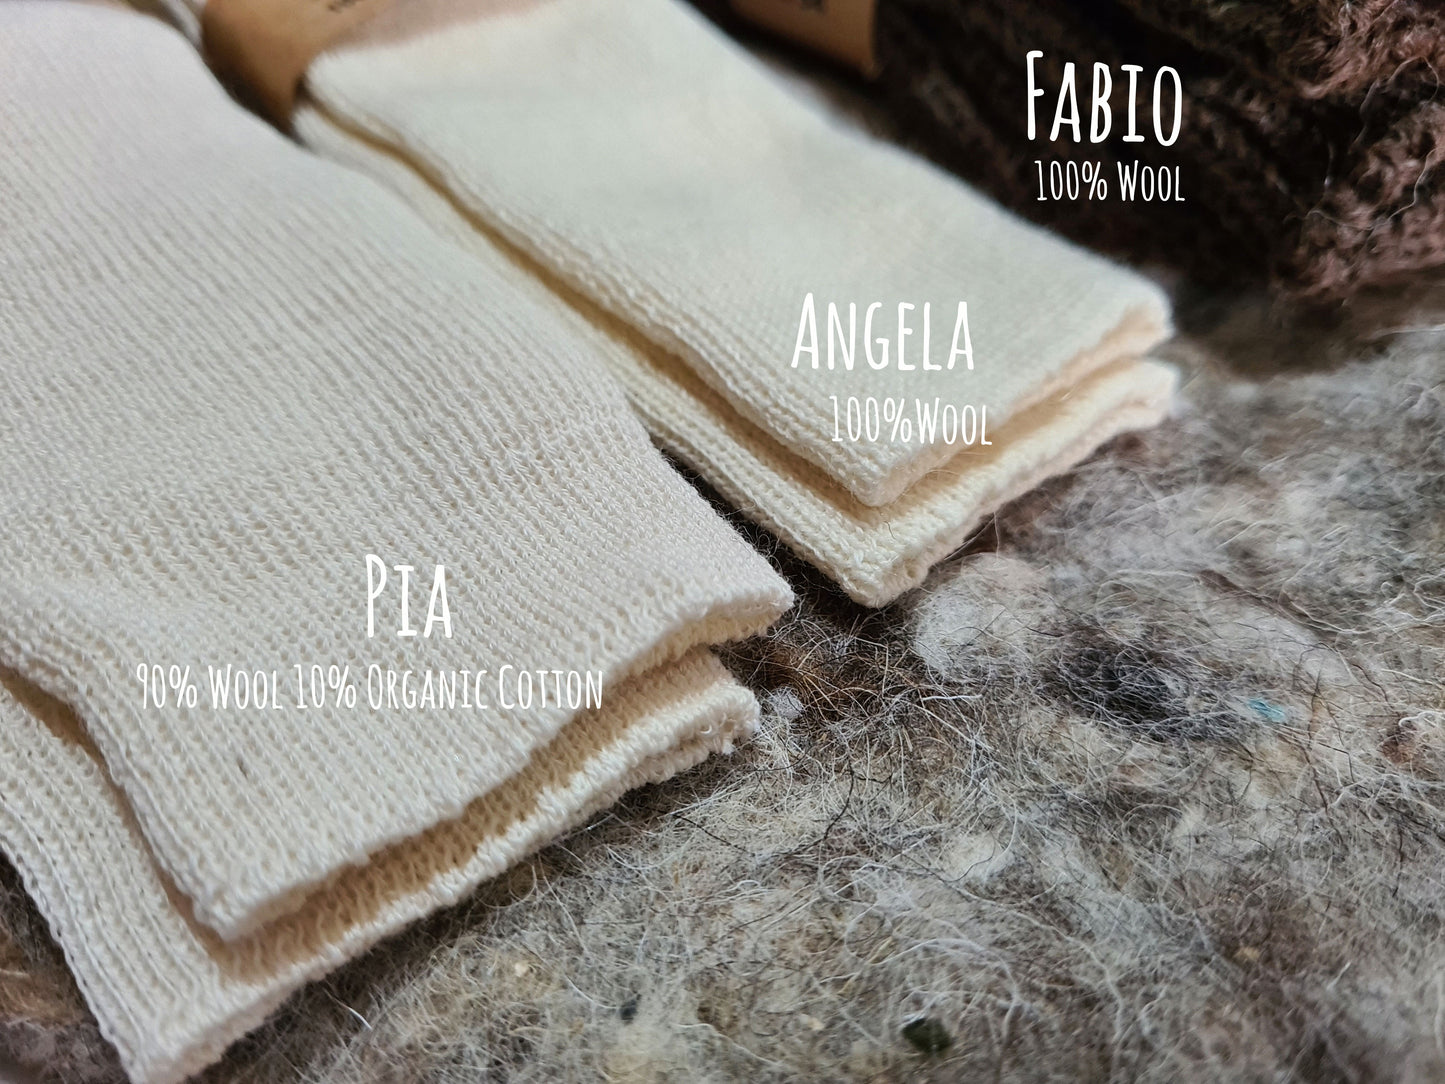 Fabio (100% wool)